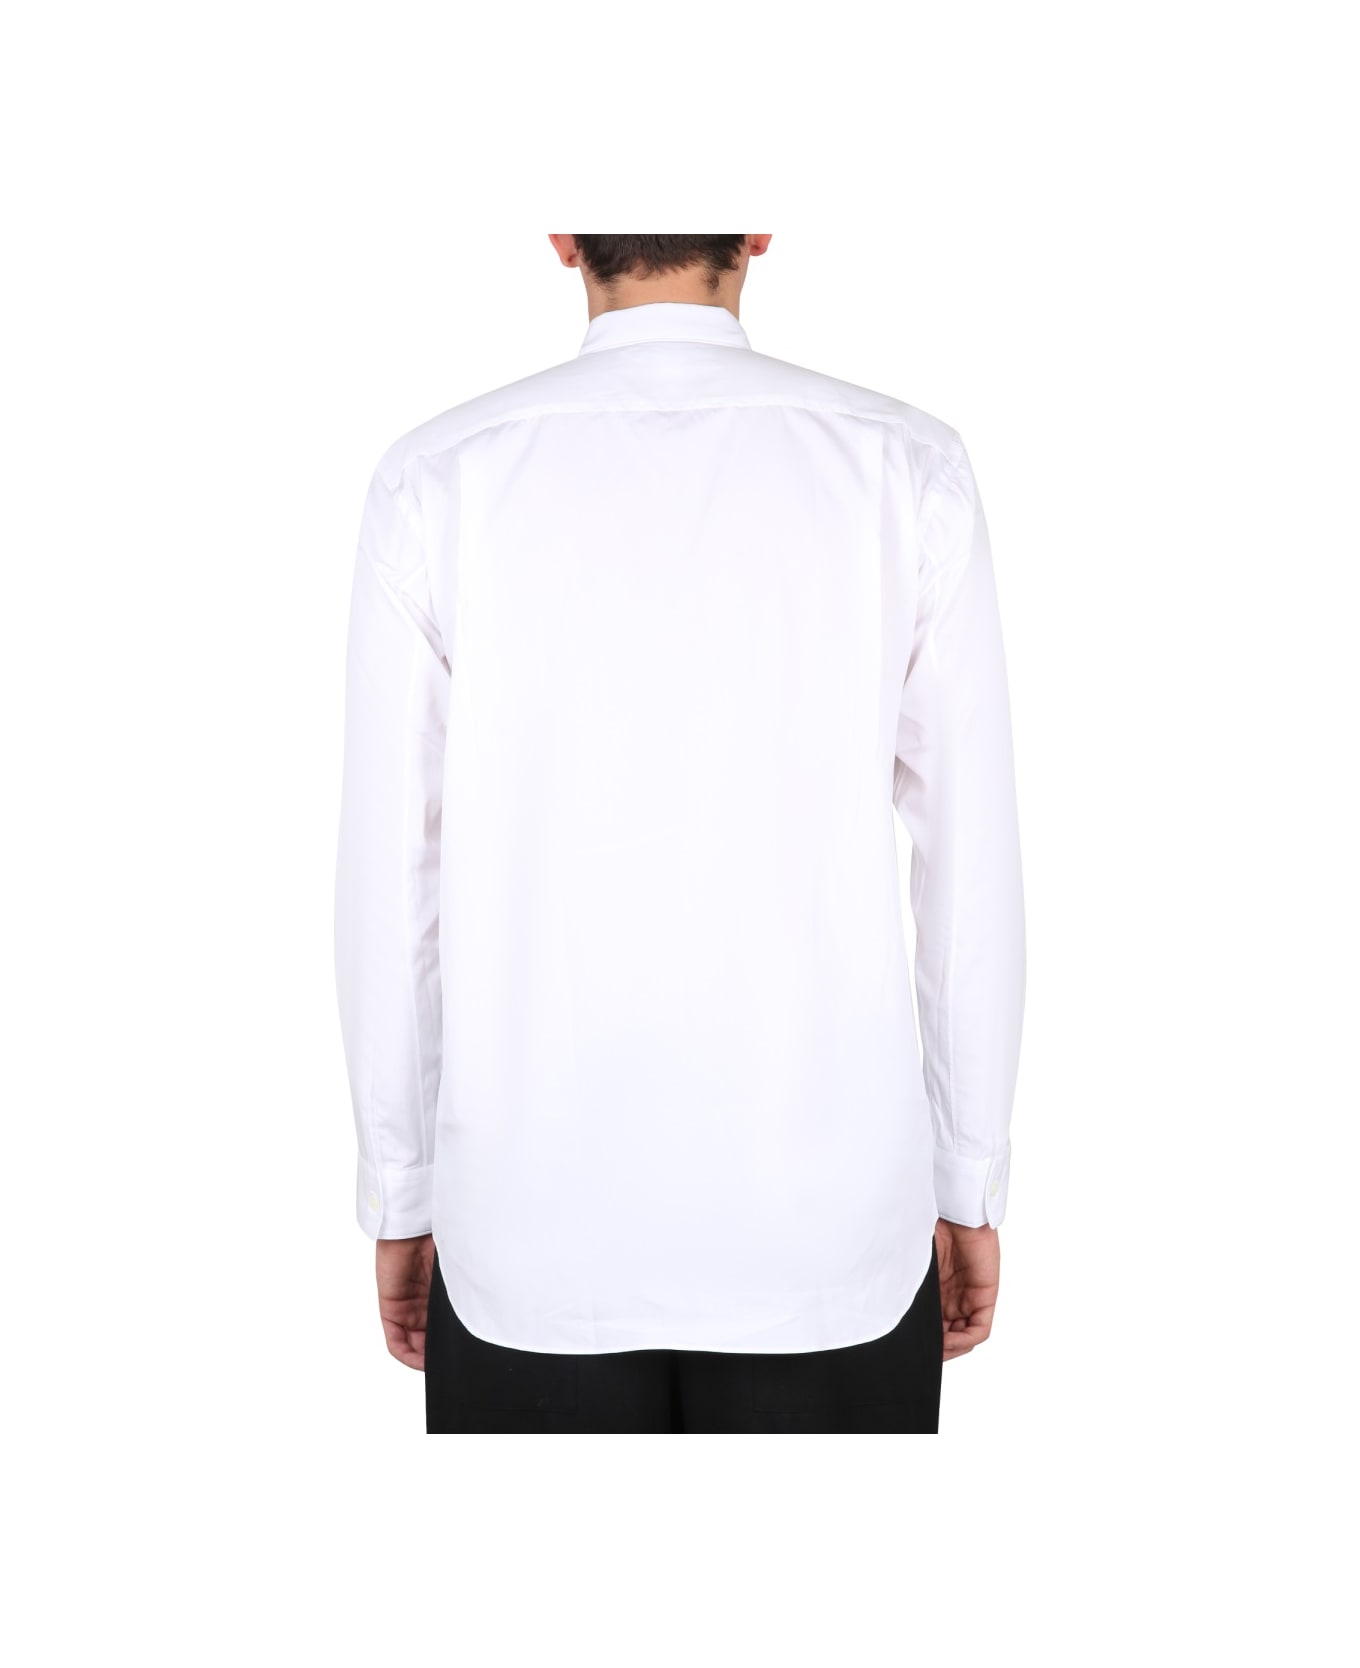 Comme des Garçons Shirt Digital Invaders Shirt - WHITE